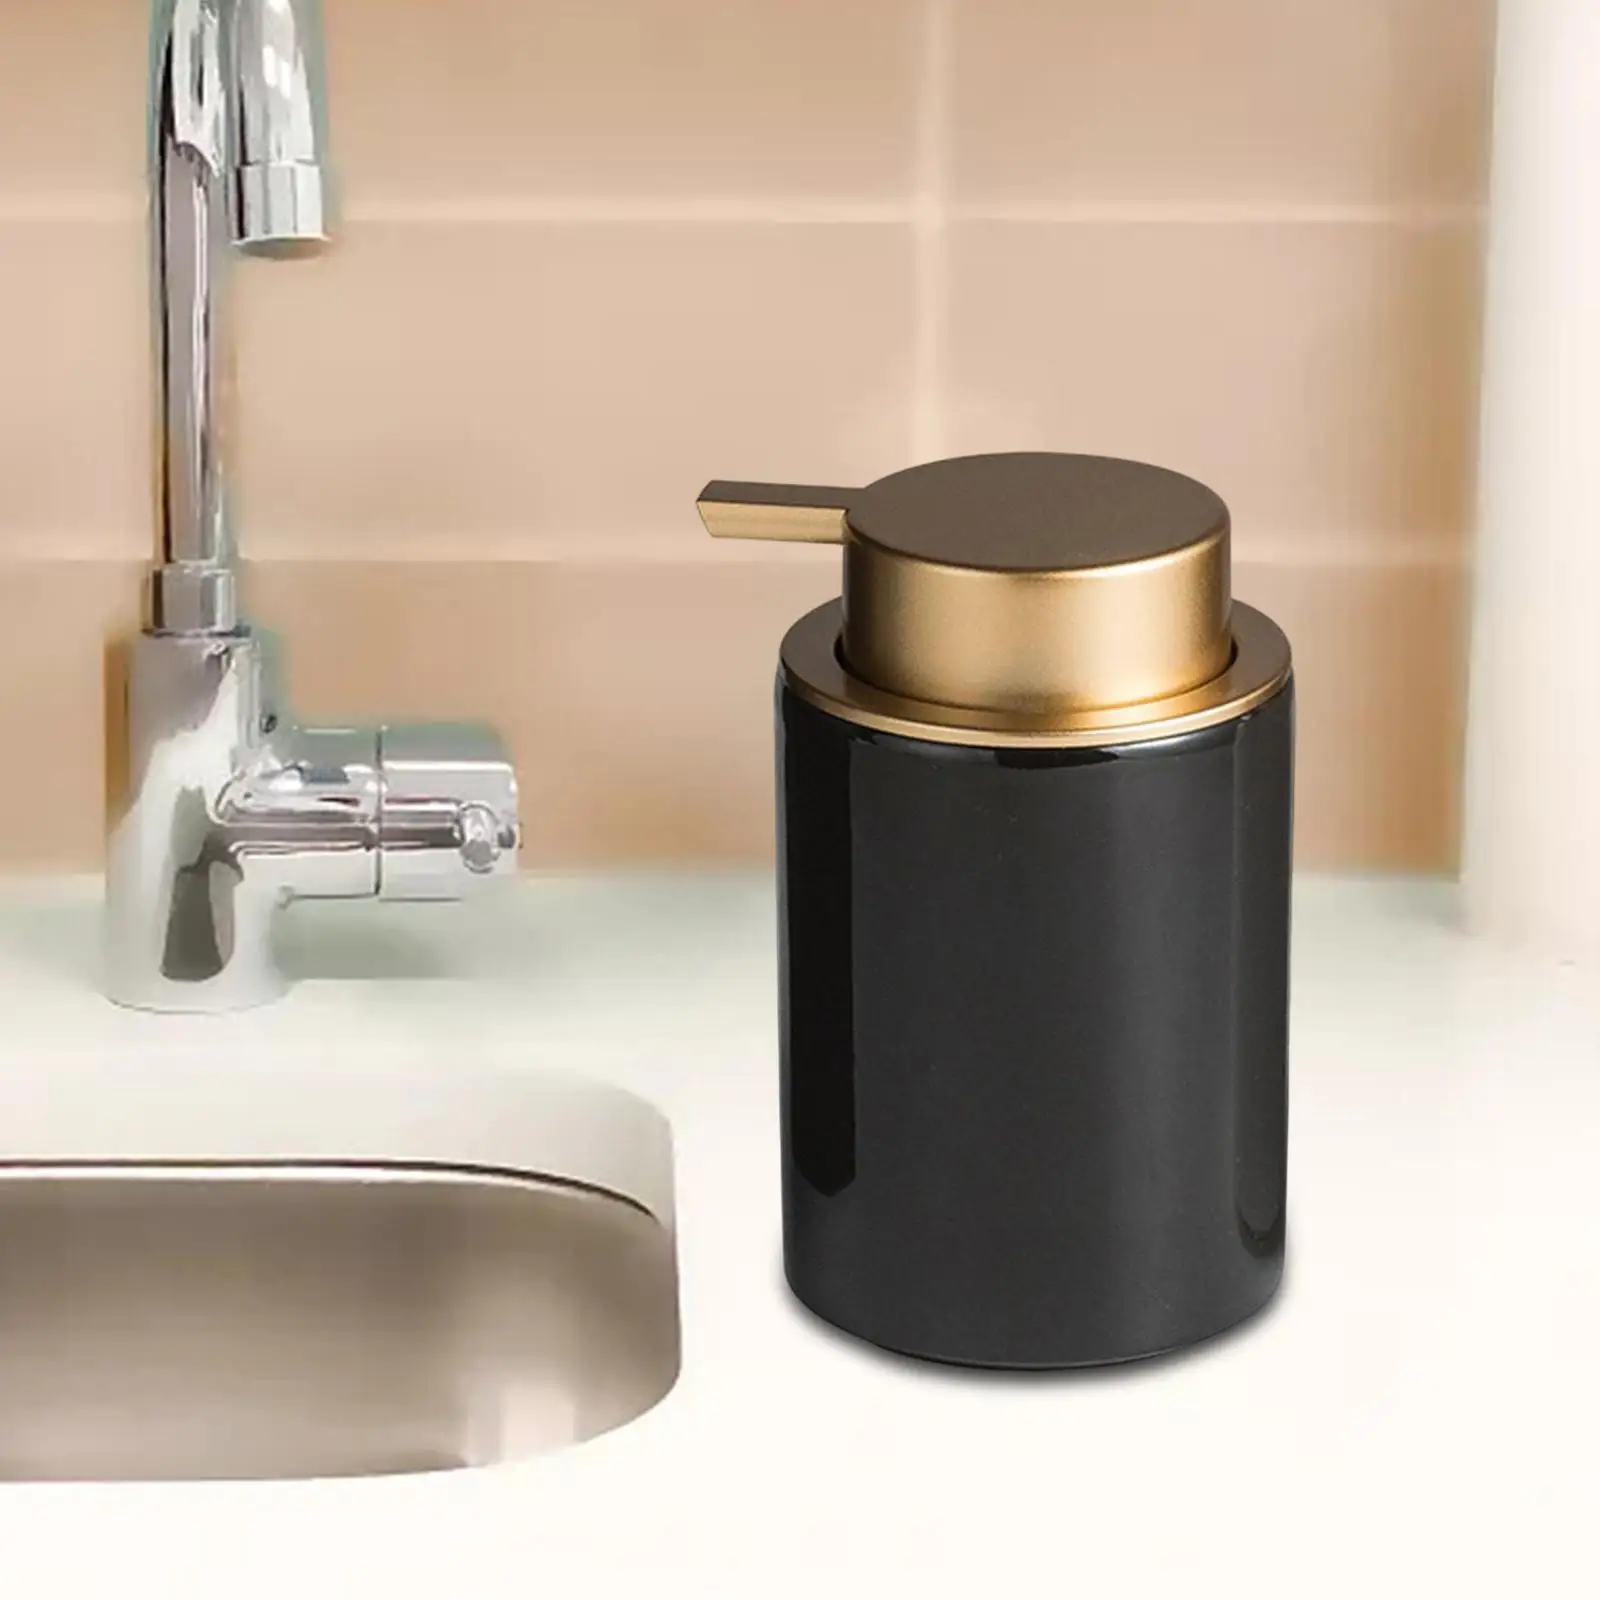 Ceramic Soap Dispenser 350ml Refillable Empty Pump Bottle Lotion Dispenser Container for Home Countertop